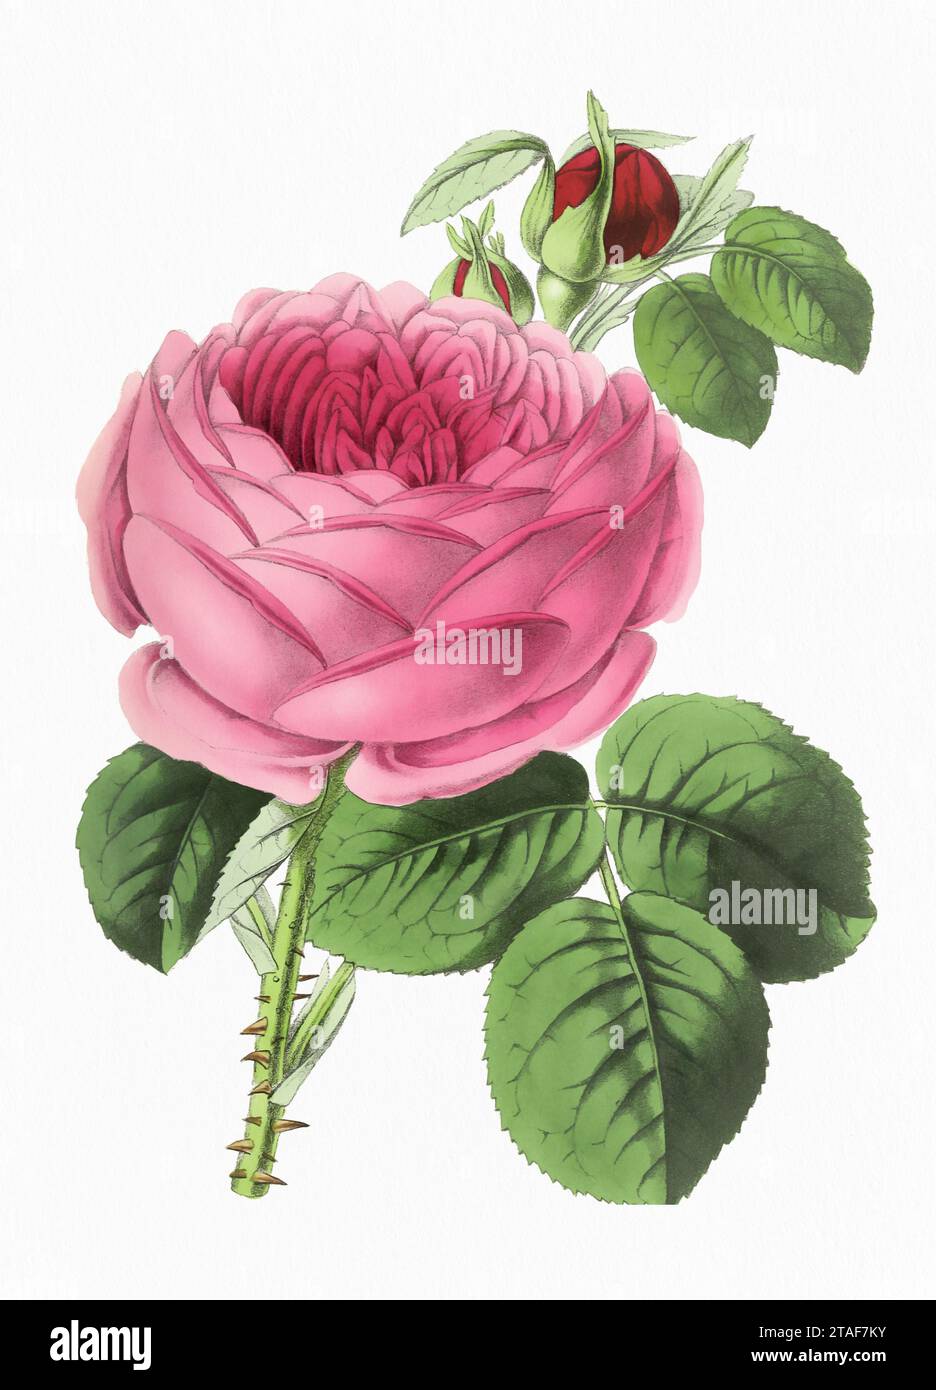 Rose Flower. Digital vintage-style flower illustration on a paper textured white background. Stock Photo